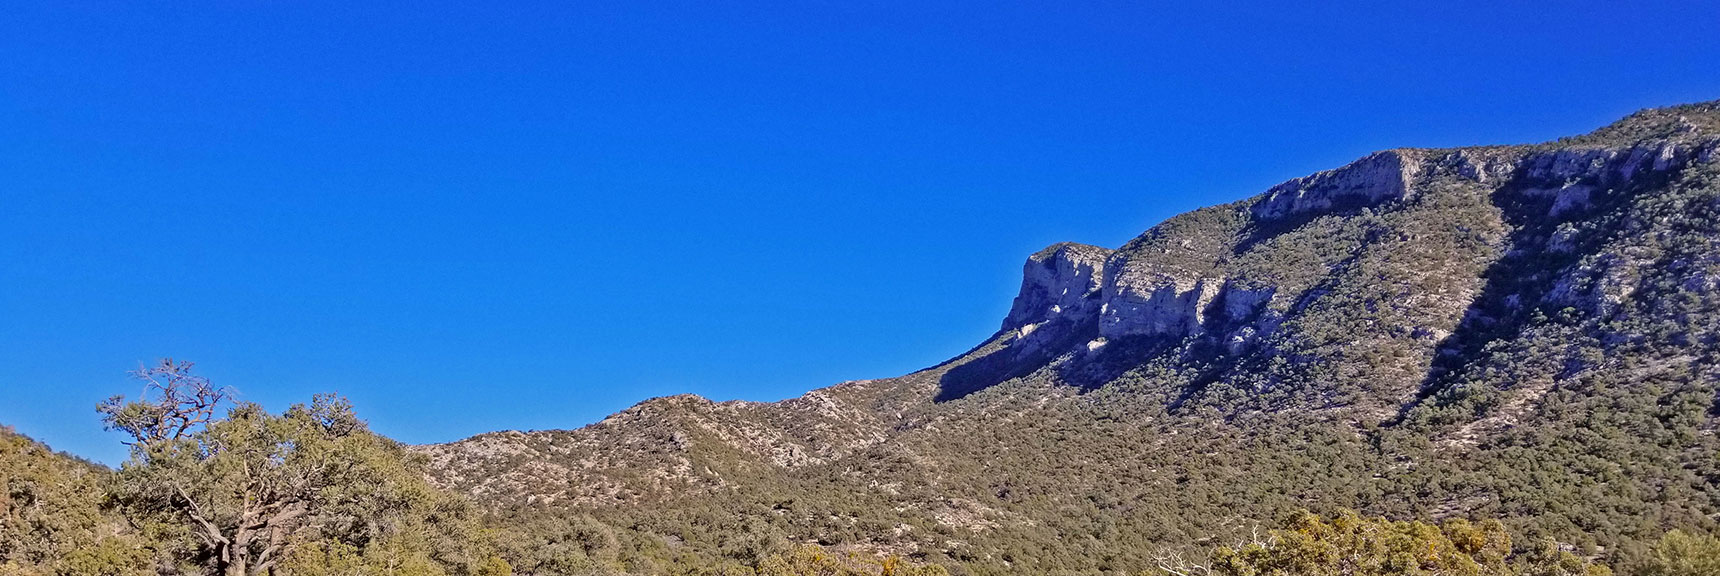 Western Cliff Approach Ridge Meets Cliff Line at Potosi North Trail | Potosi Mt. Summit via Western Cliffs Ridgeline, Spring Mountains, Nevada